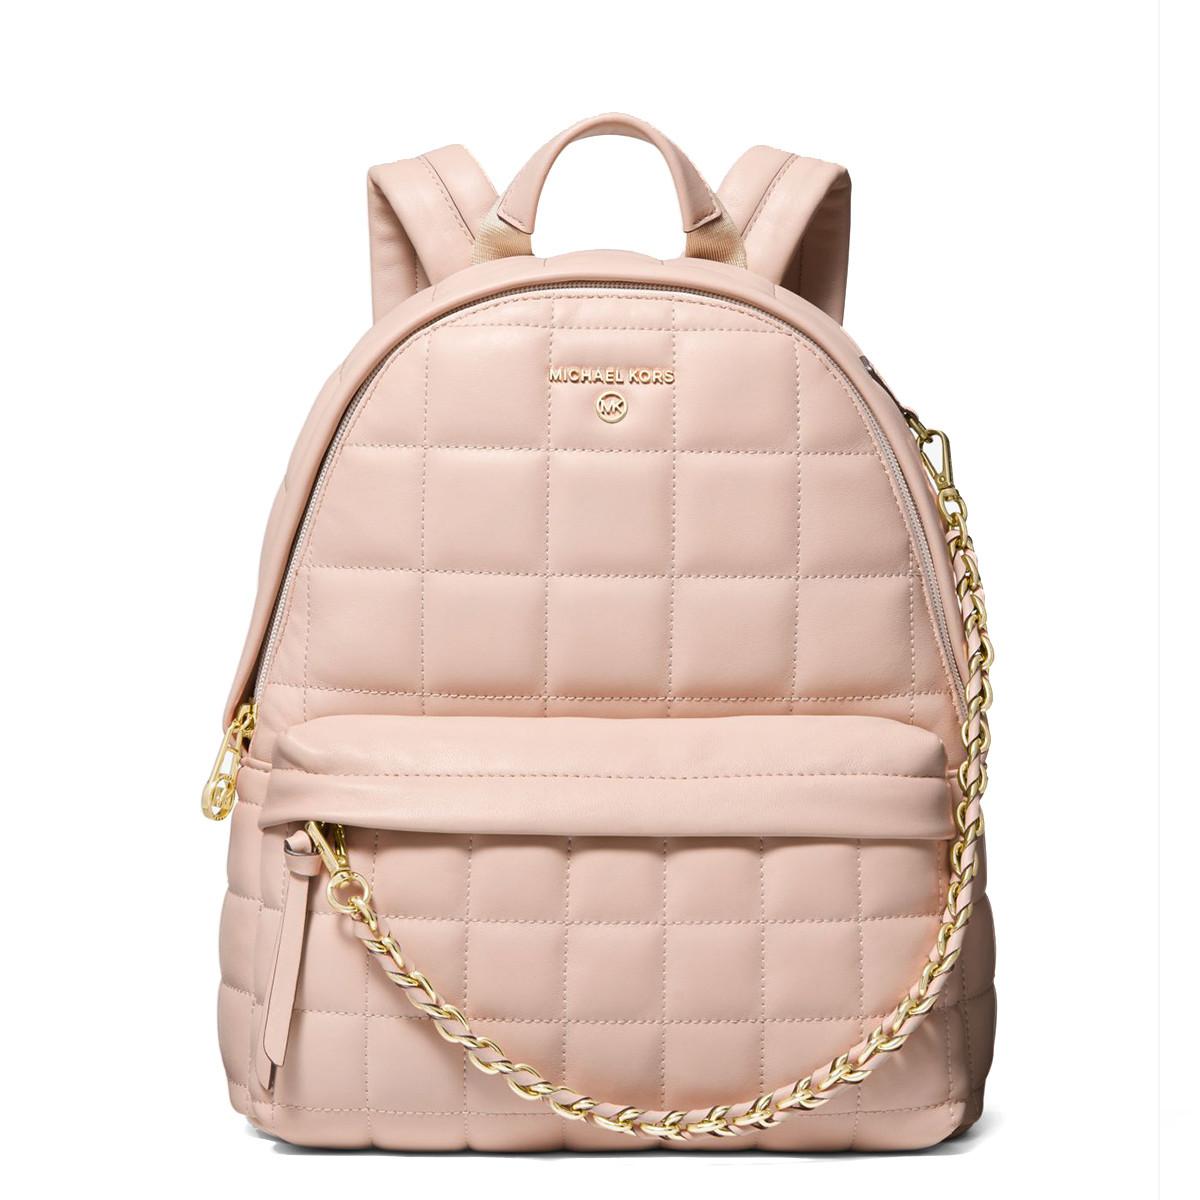 michael kors pink backpack purse